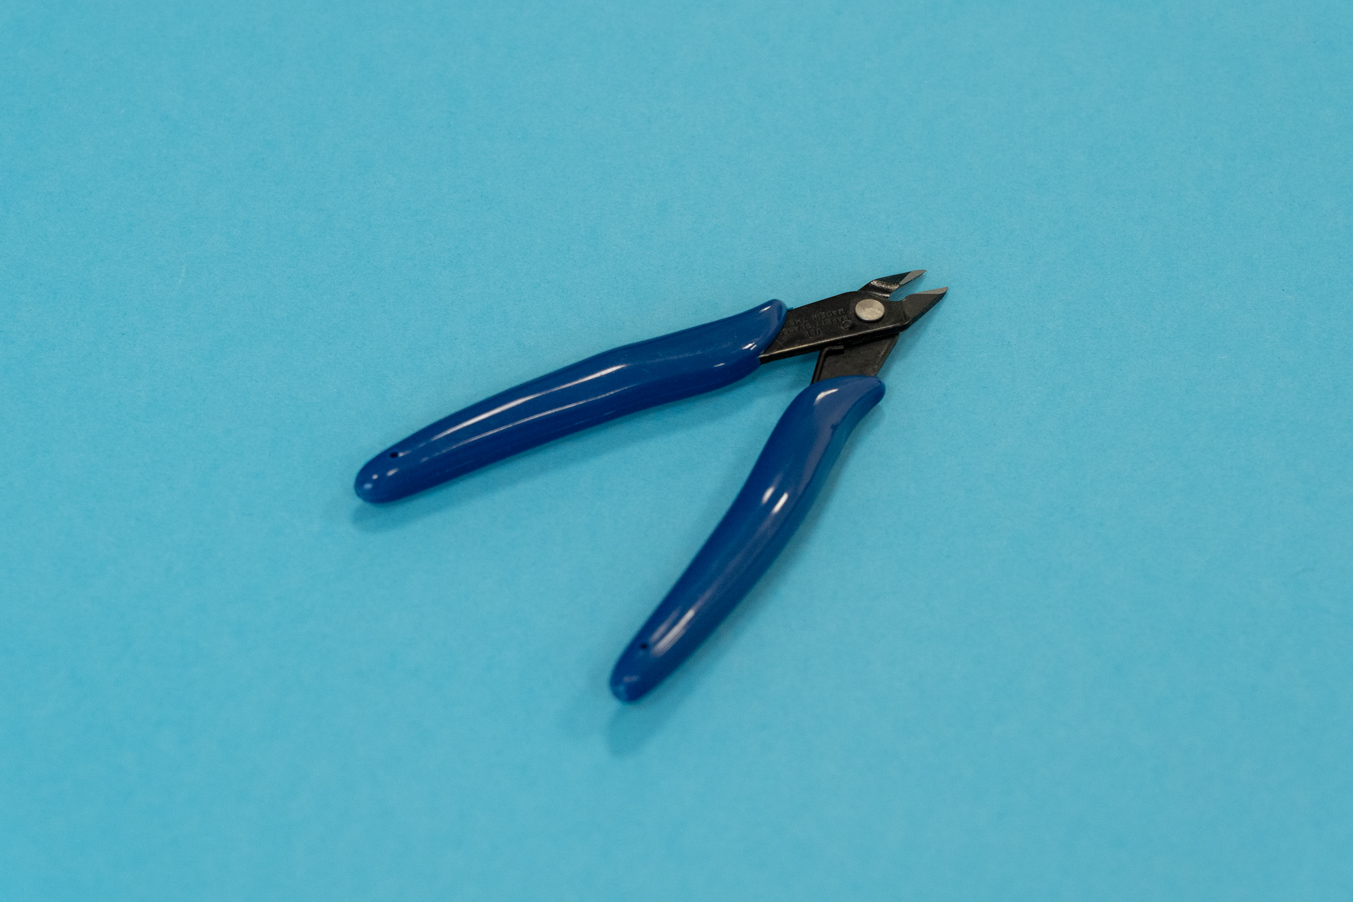 Diagonal cutter pliers